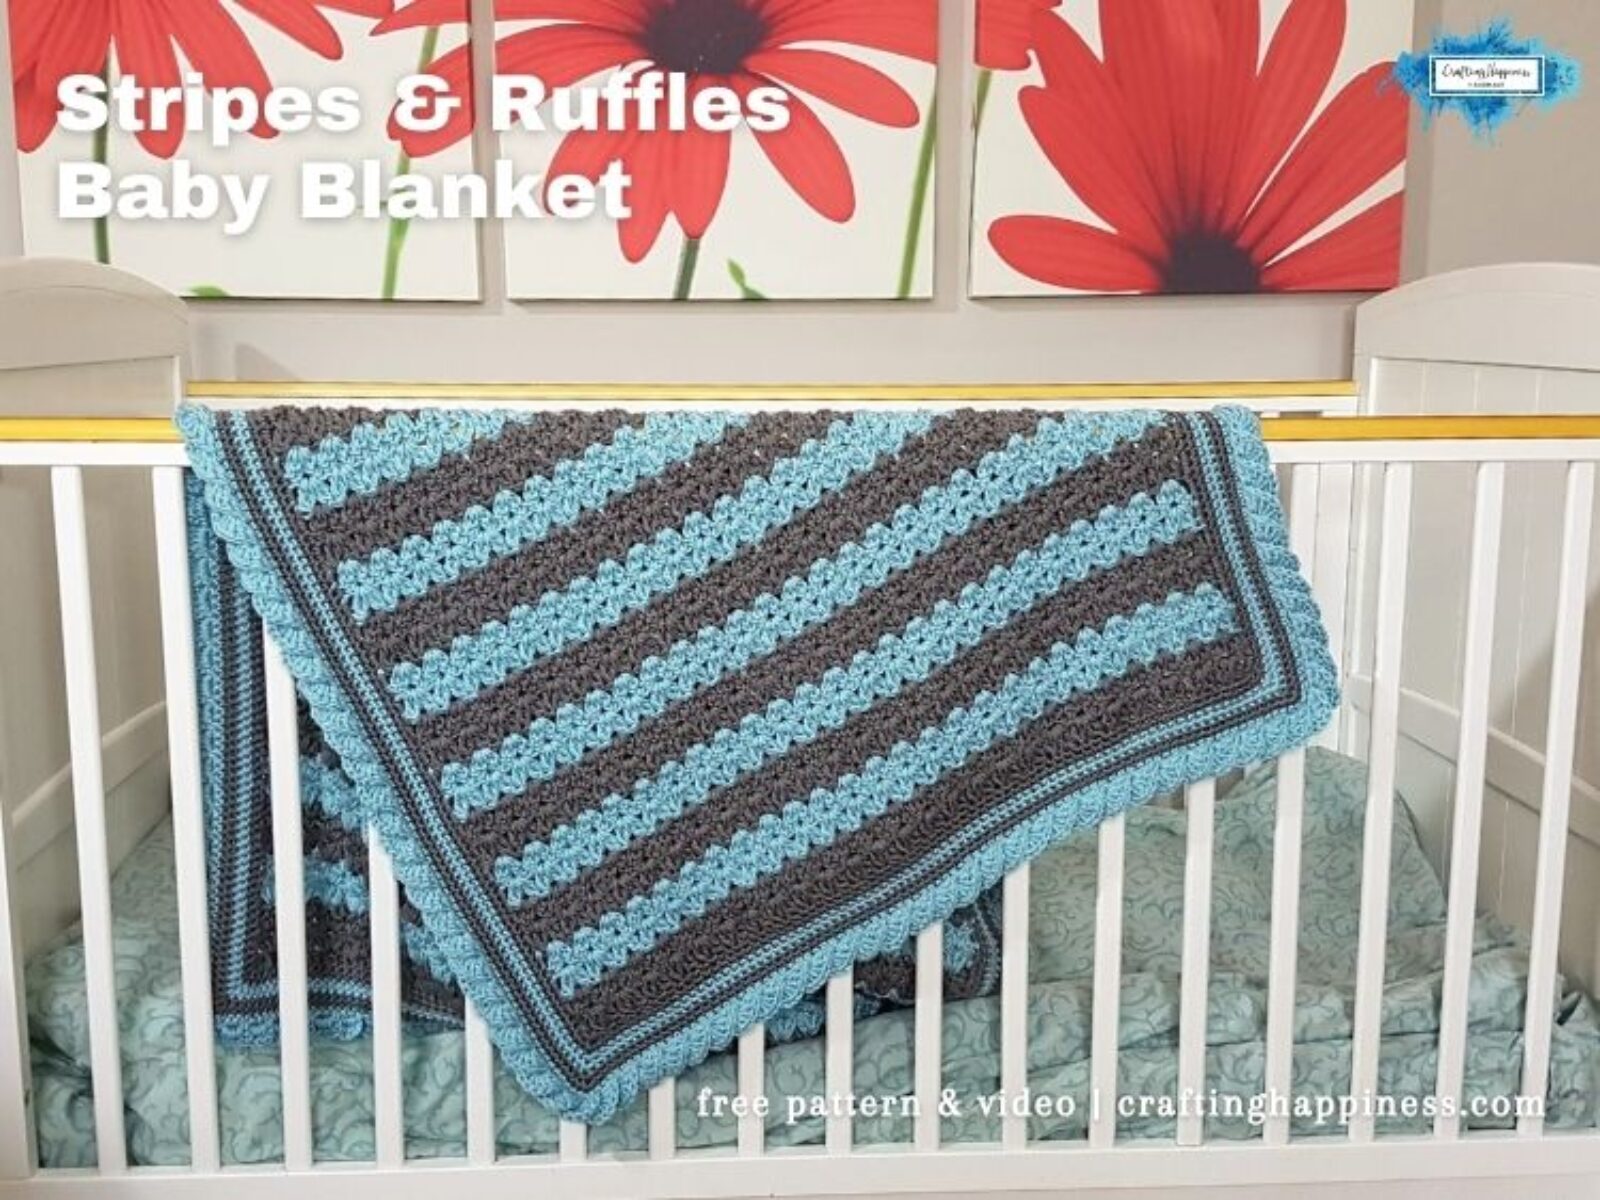 FB BLOG POSTER - Stripes & Ruffles Baby Blanket